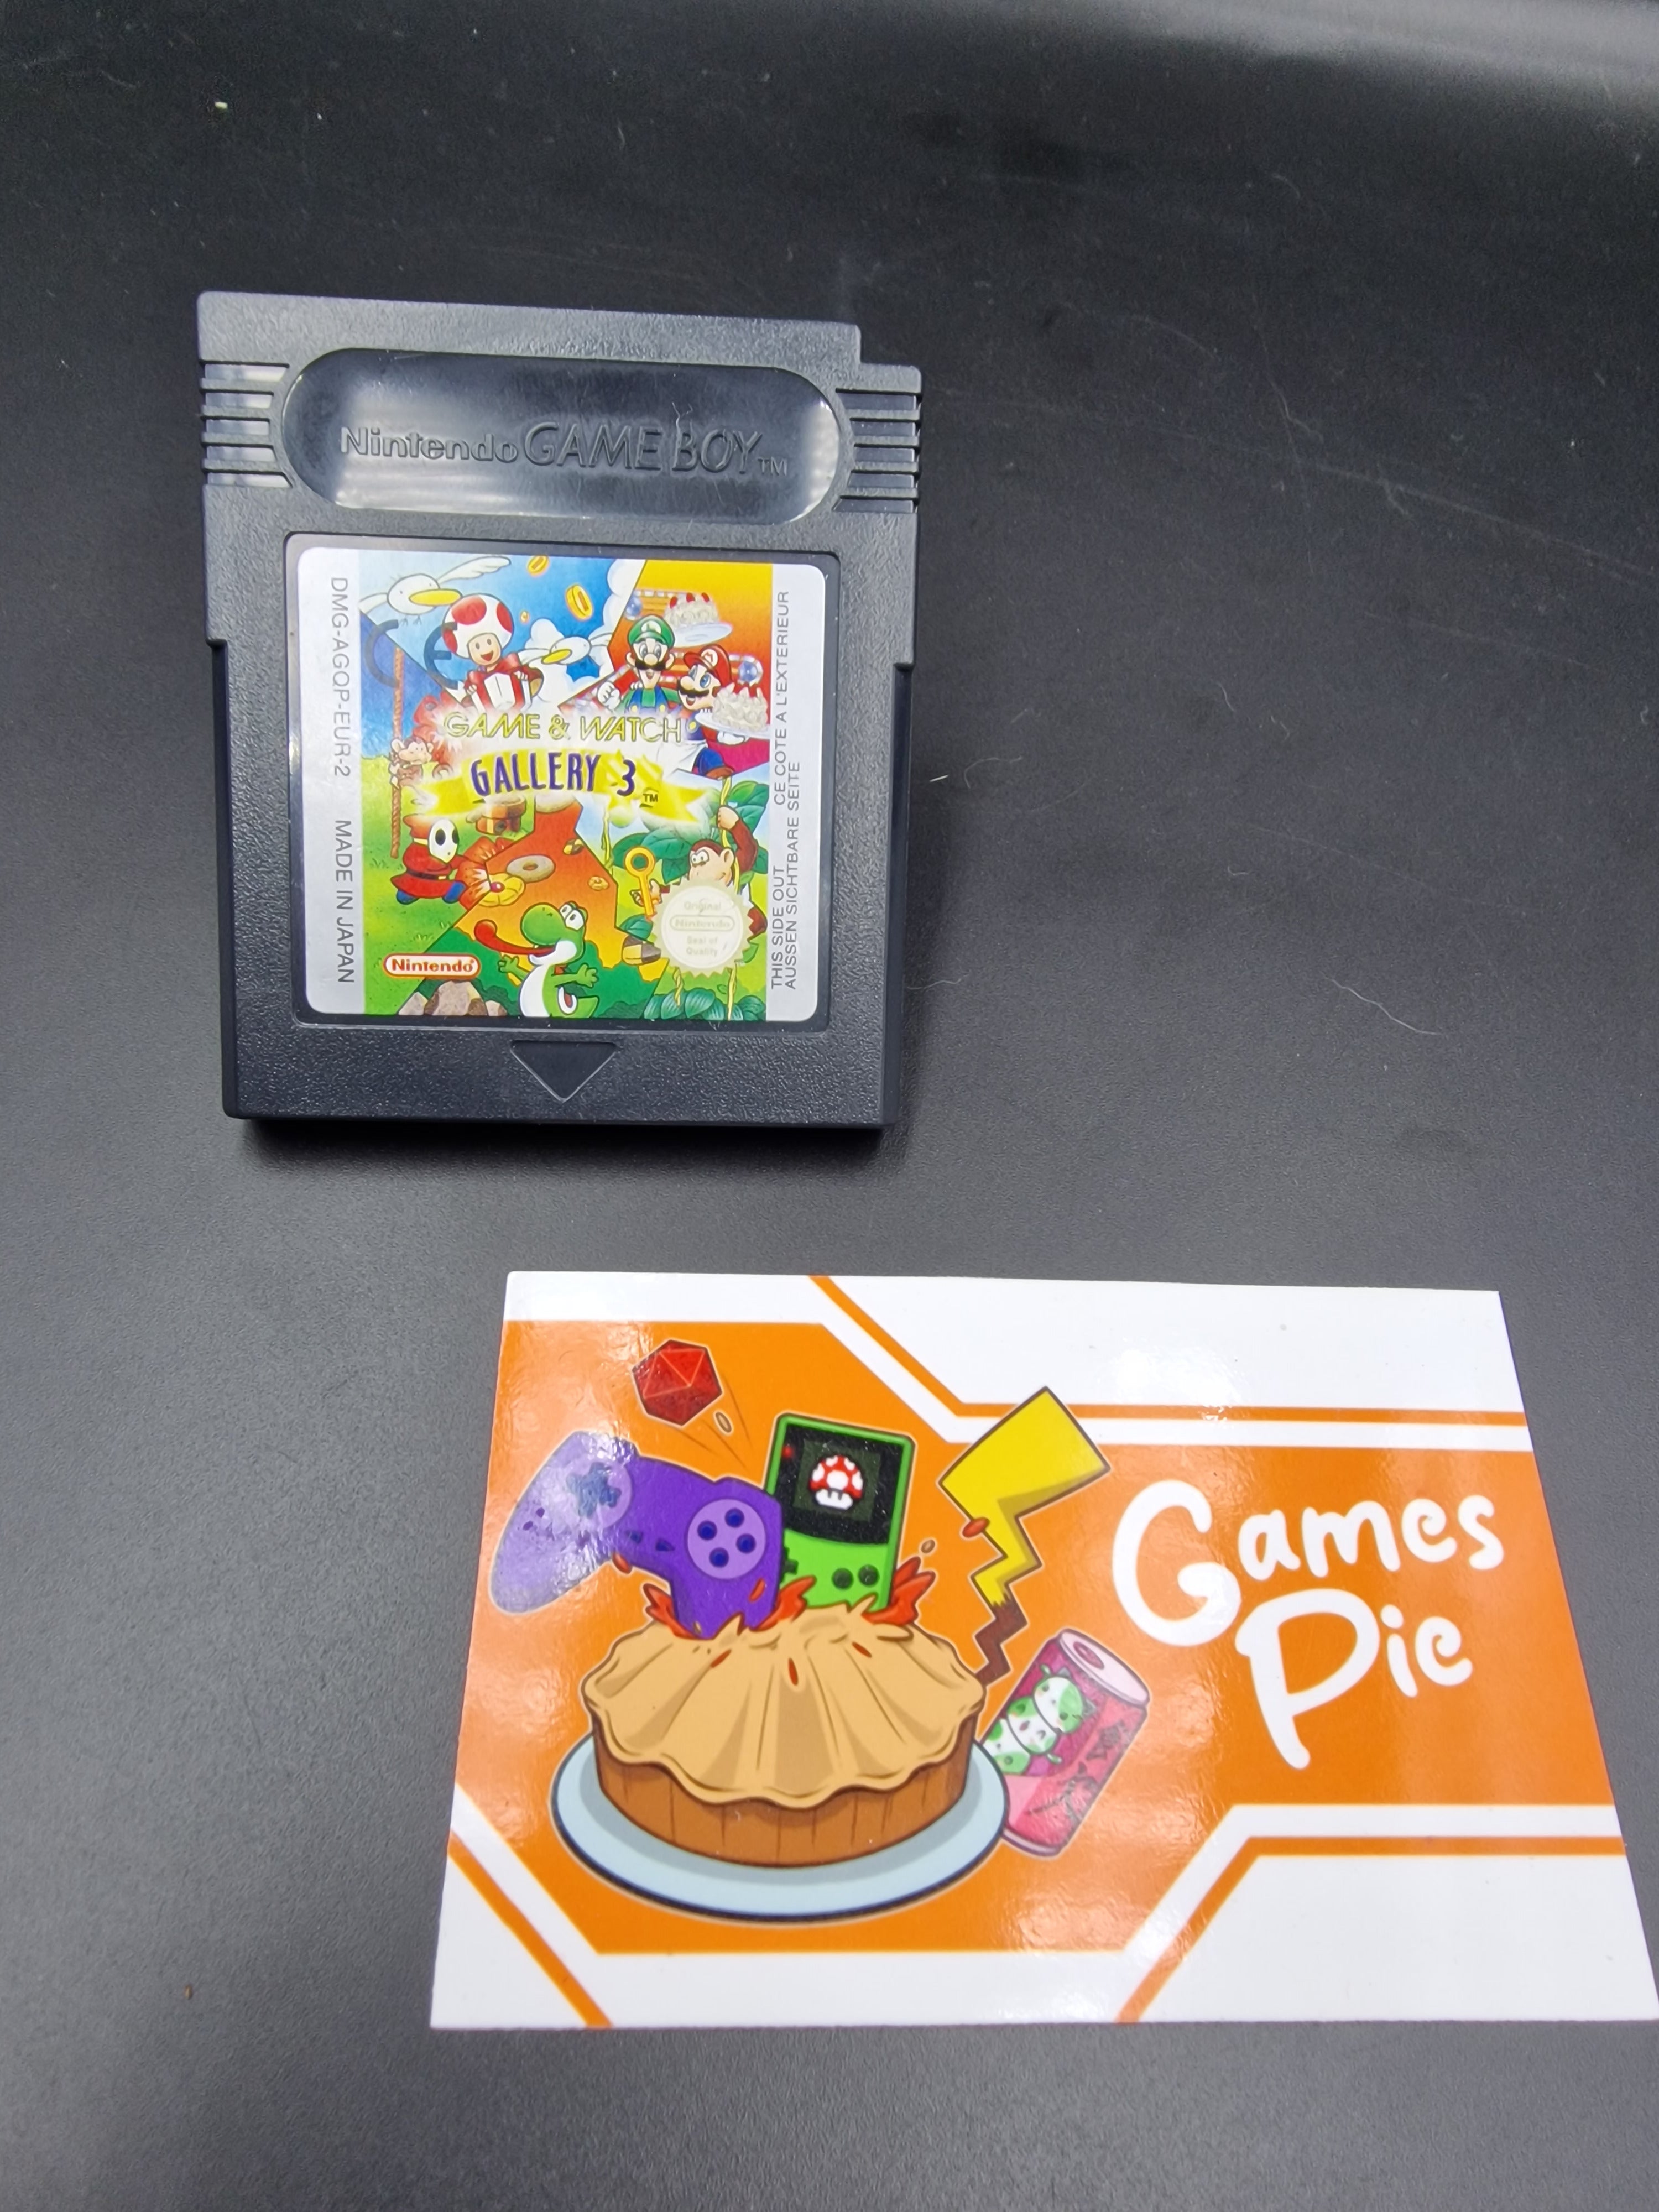 Game &amp; Watch Galley 3 Nintendo Game Boy Color